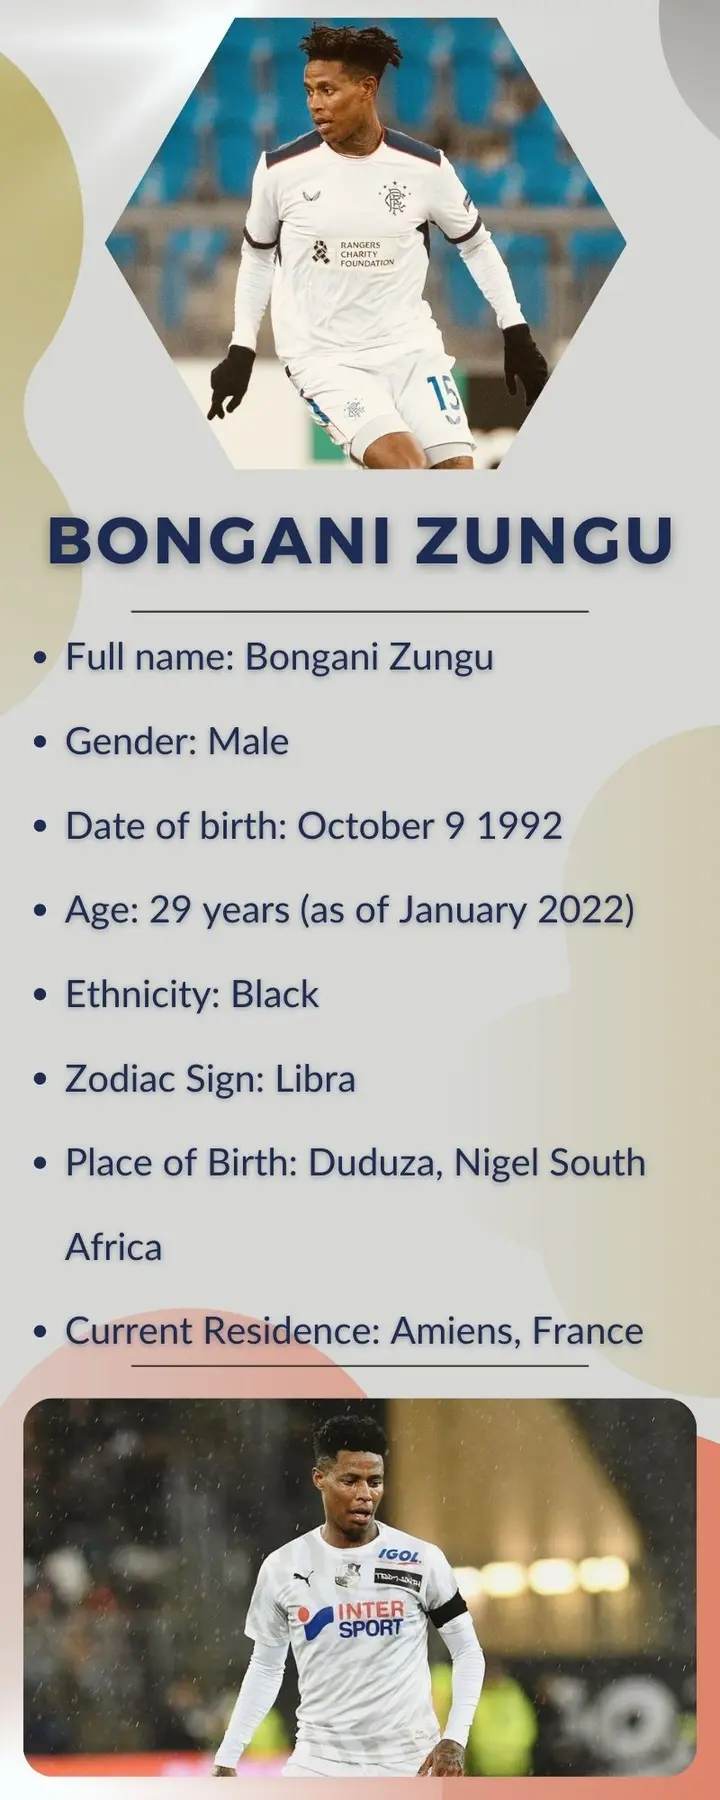 Bongani Zungu